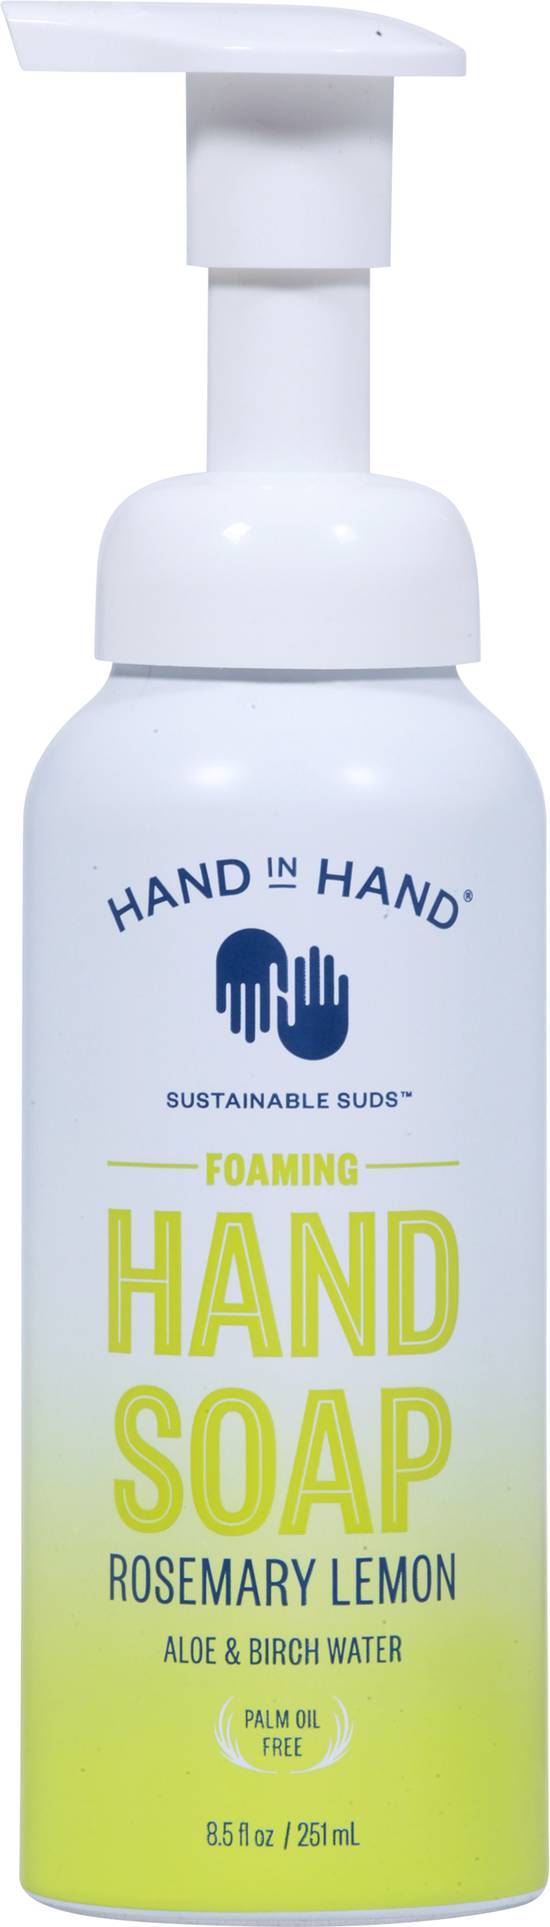 Hand in Hand Foaming Rosemary Lemon Hand Soap